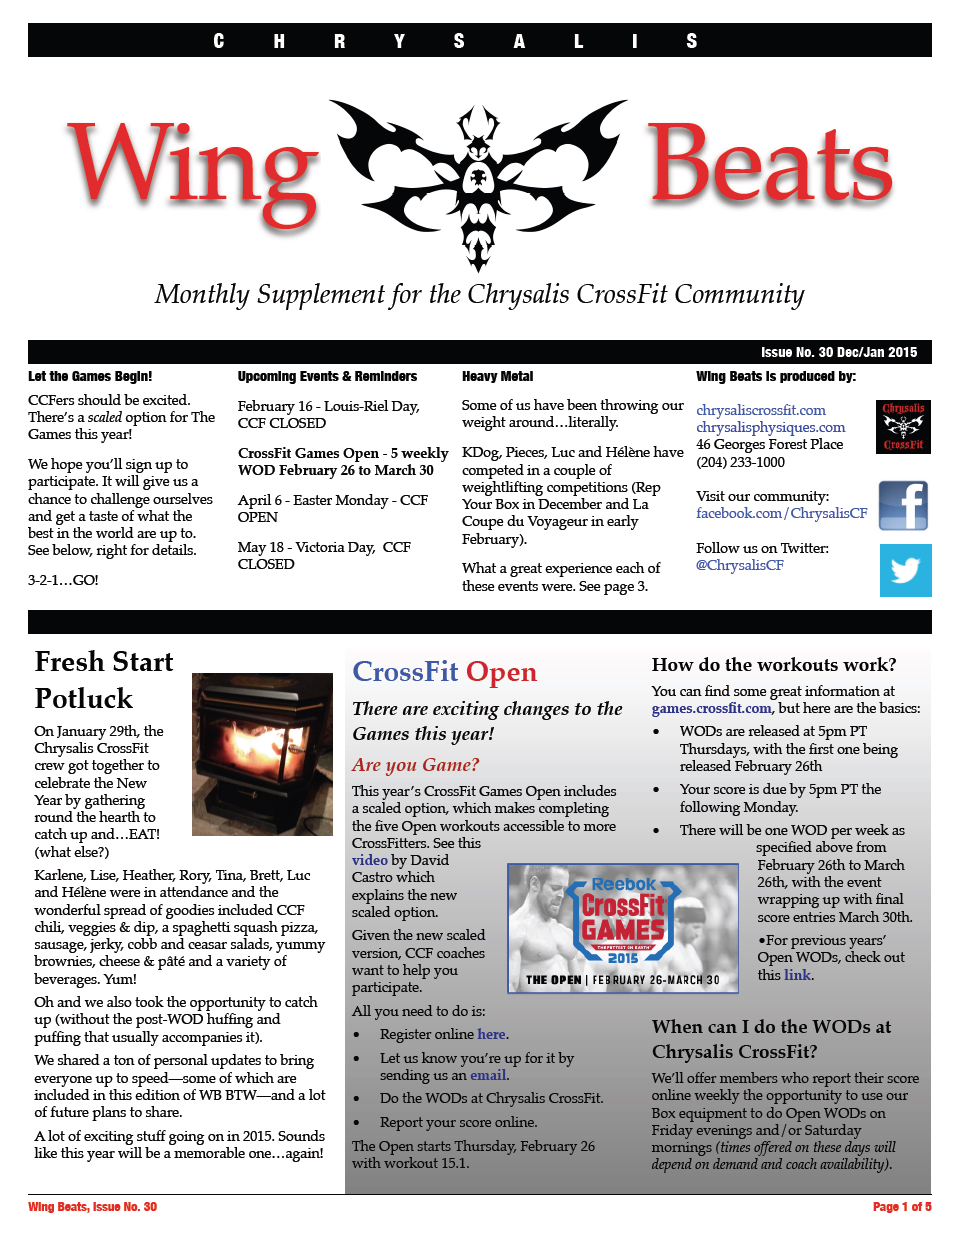 WingBeats Issue #30 - DecJan 2015